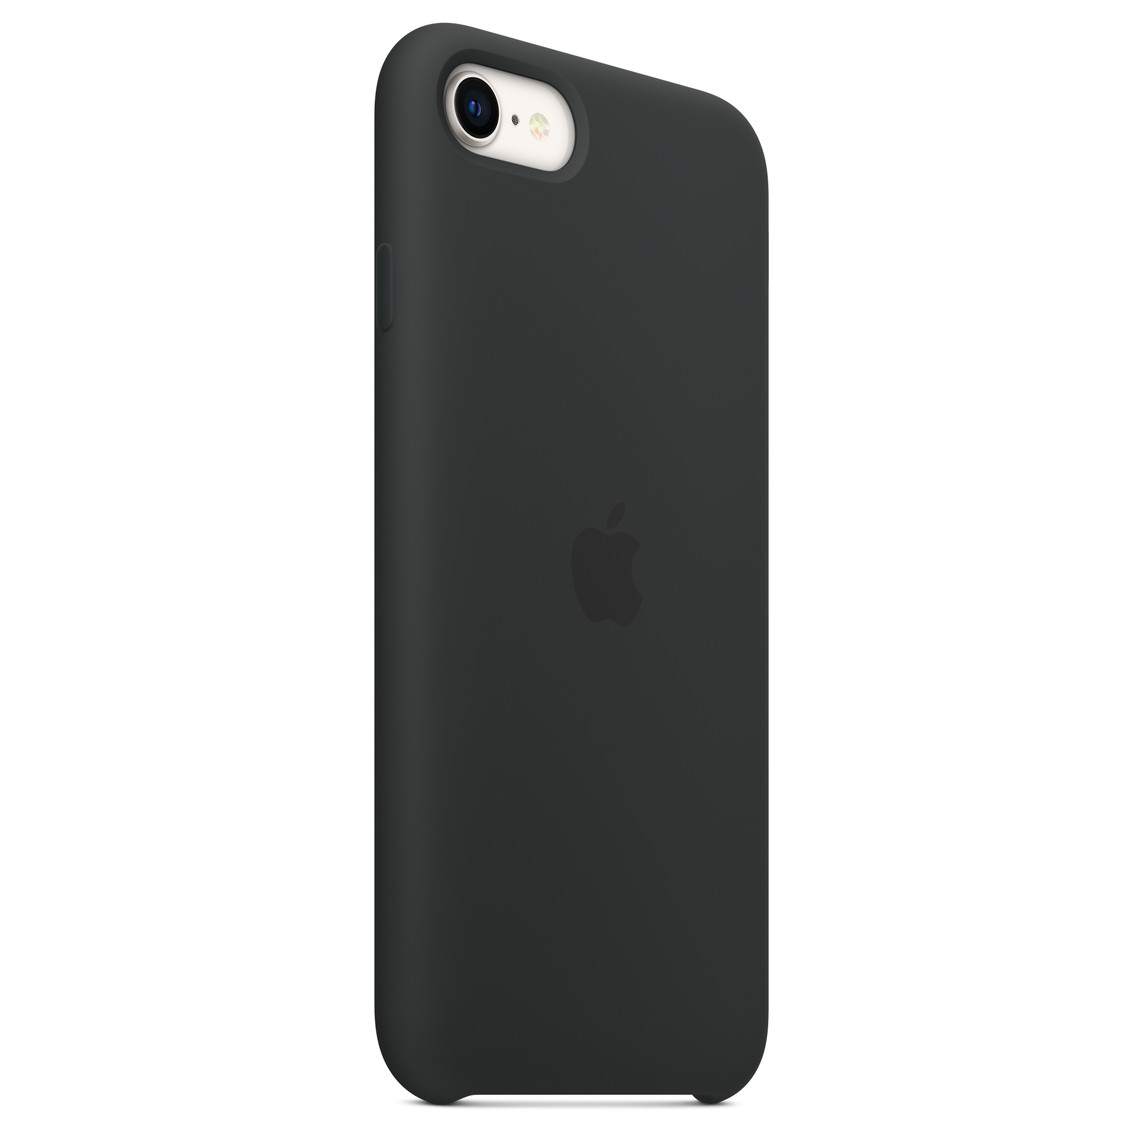 iPhone SE Silicone Case - Black